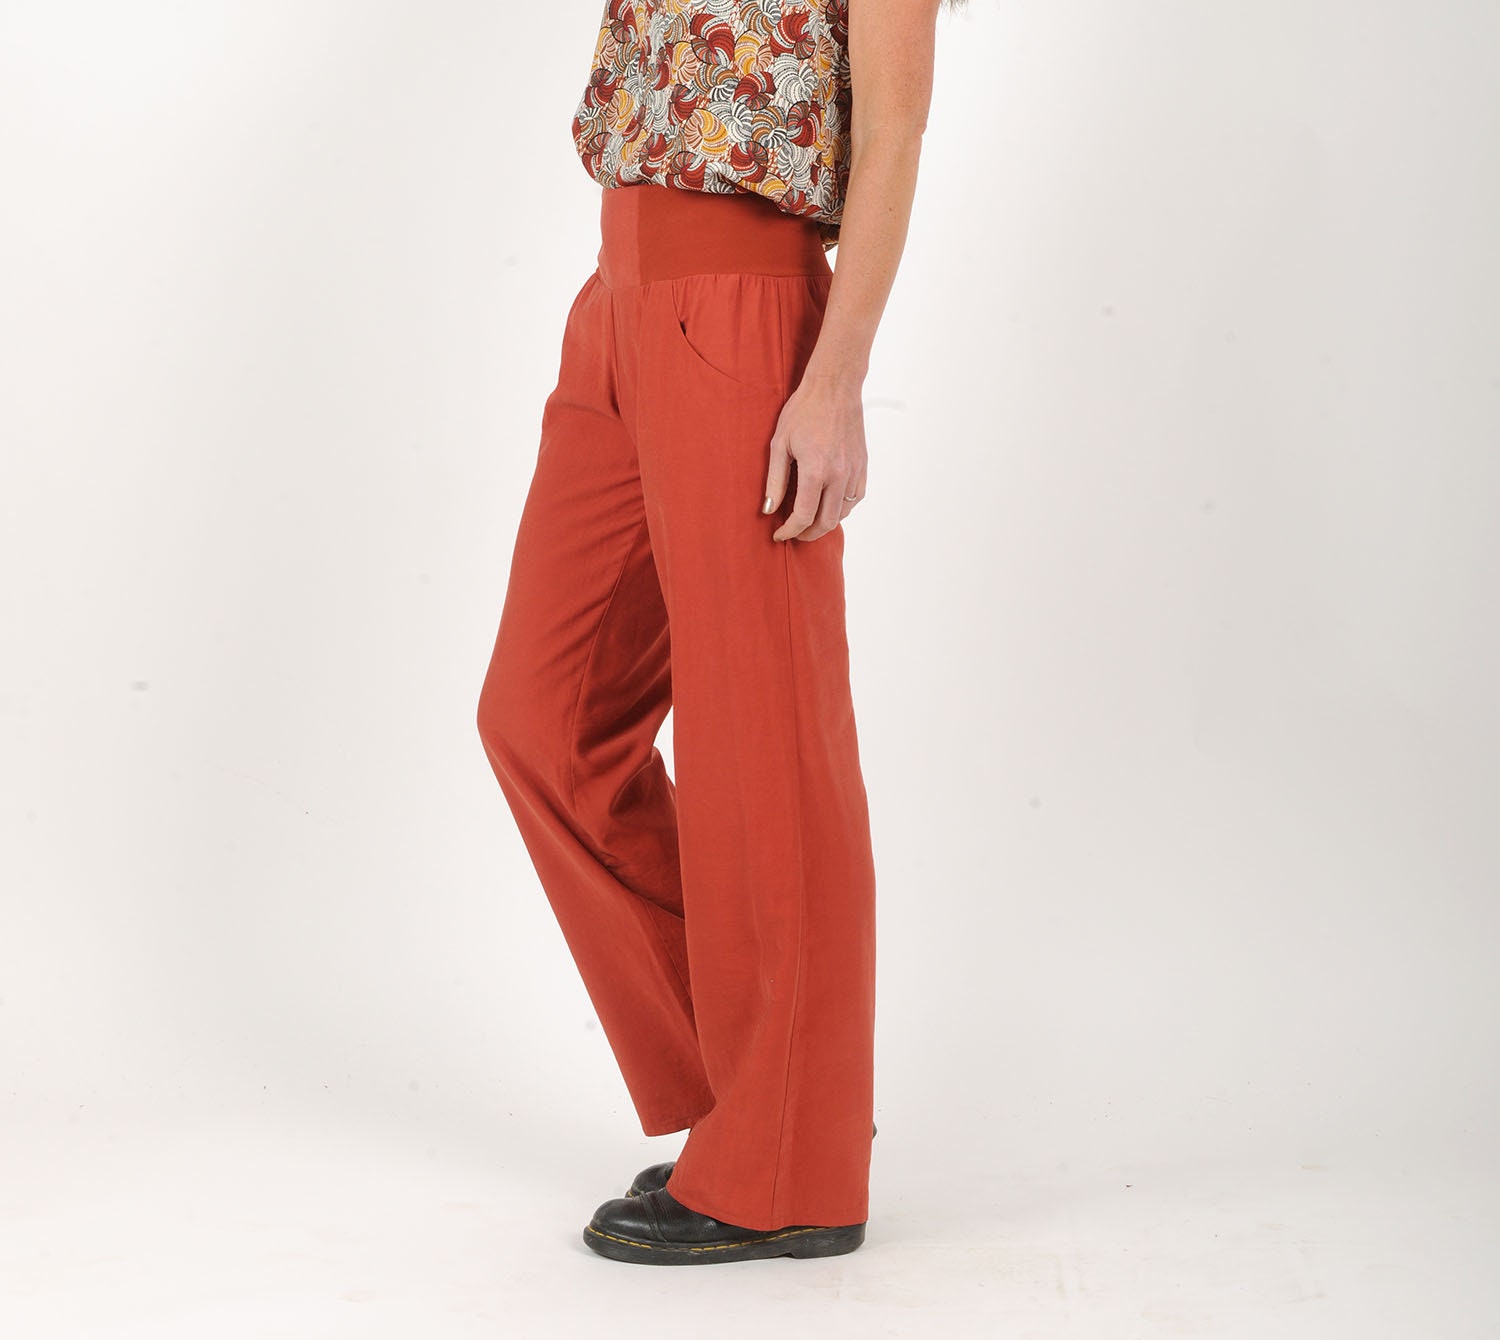 Amazoncom Orange Pants